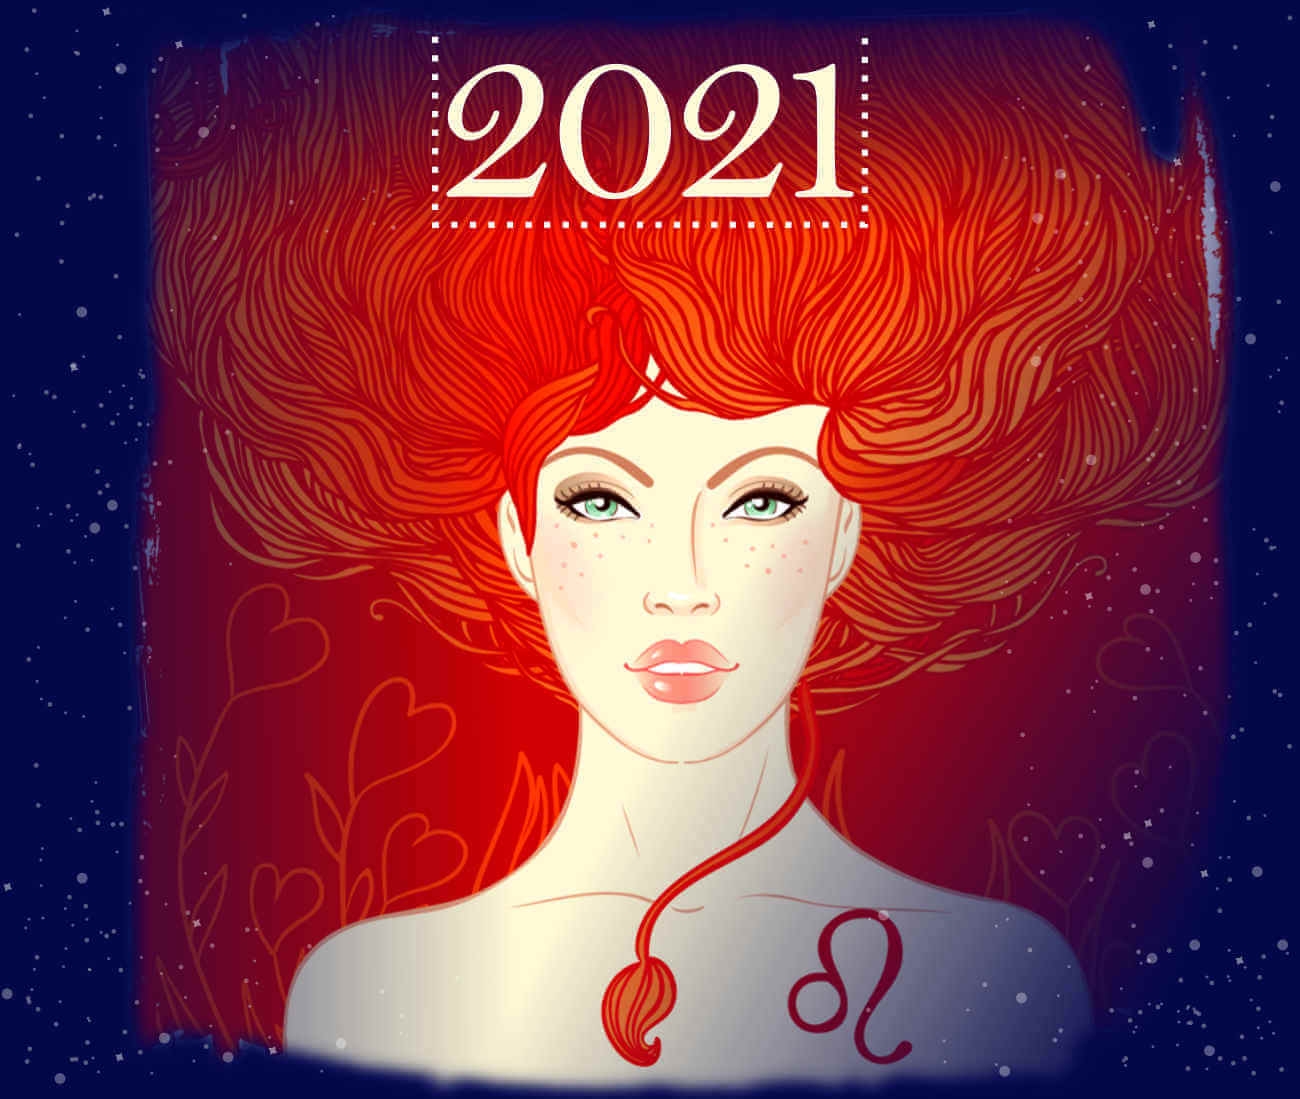 2753 horoscope leo 2021